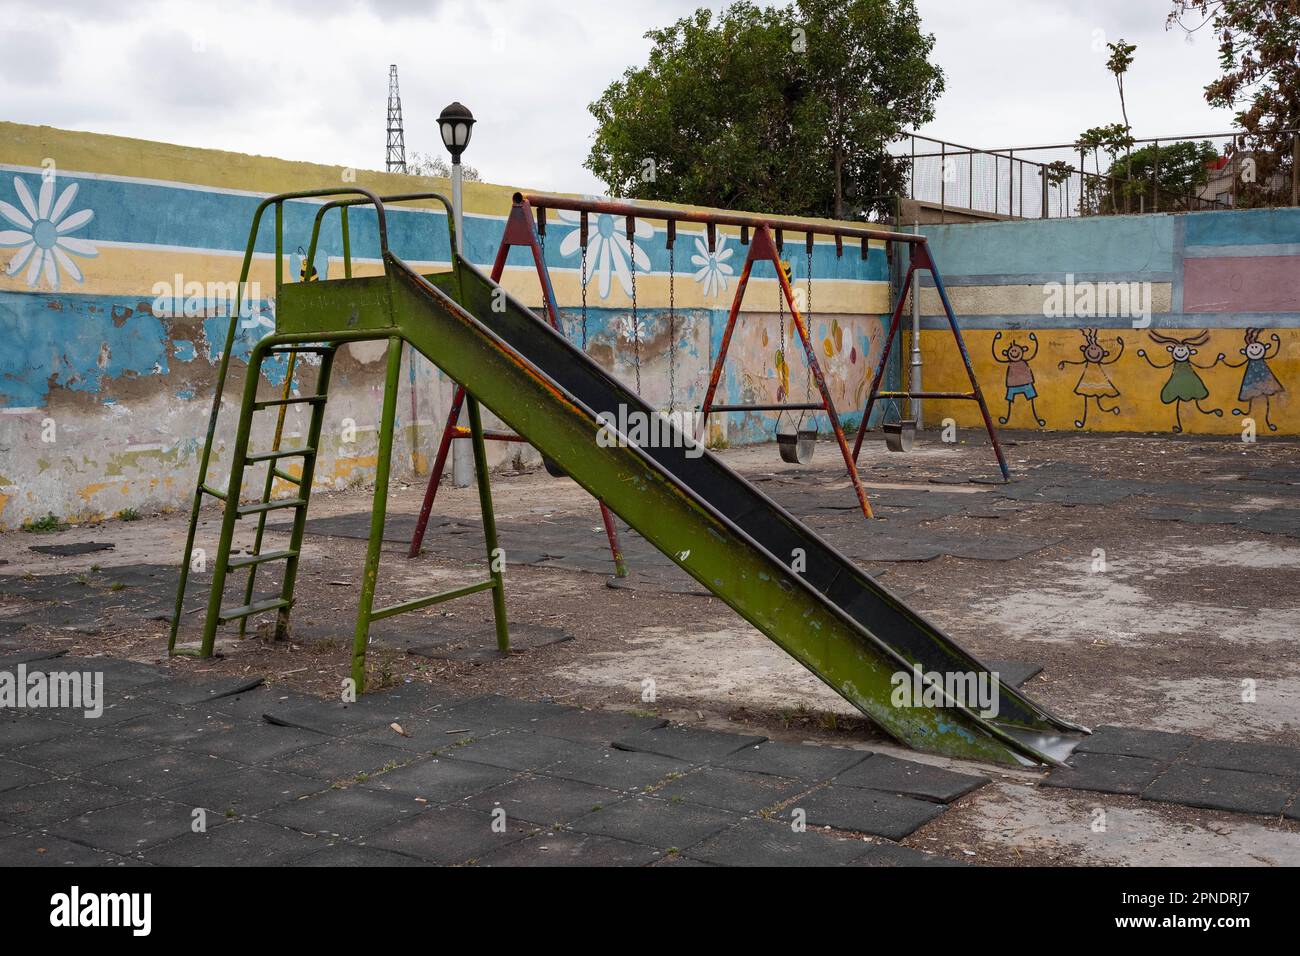 slide on old playground, Damascus, Syria Stock Photo